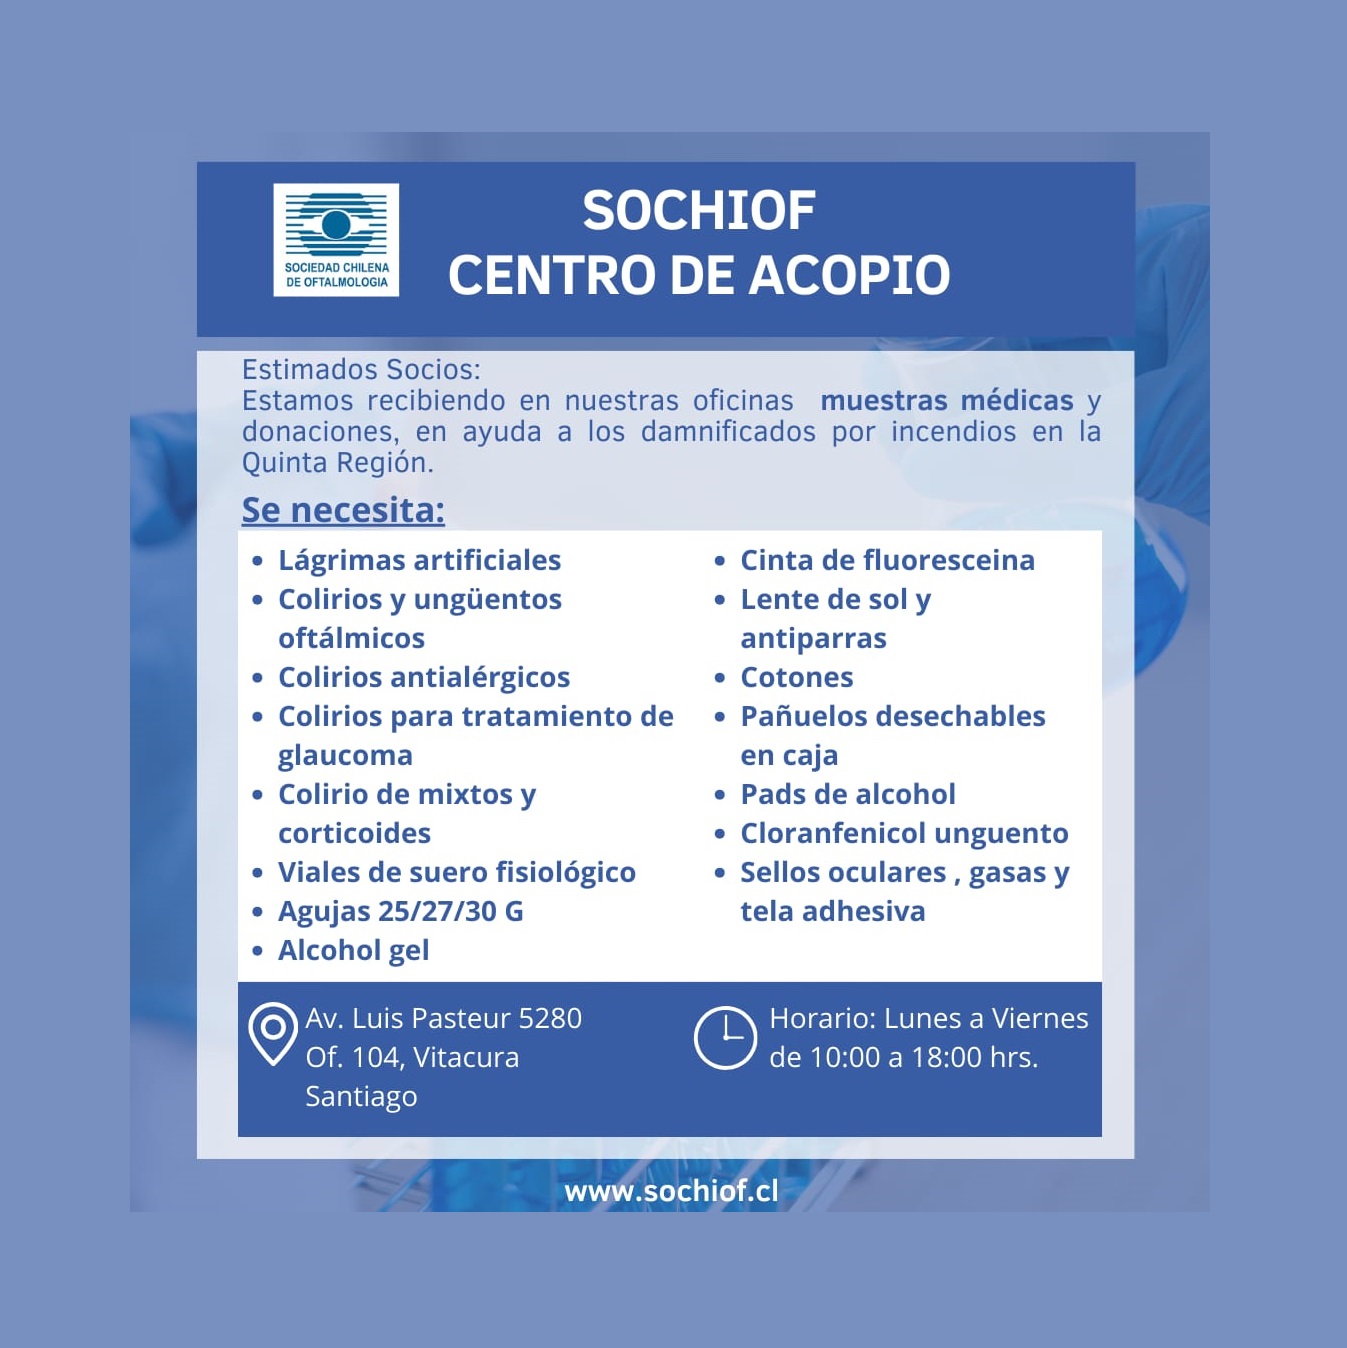 SOCHIOF Centro de Acopio - Medicamentos para Damnificados por Incendios V Región